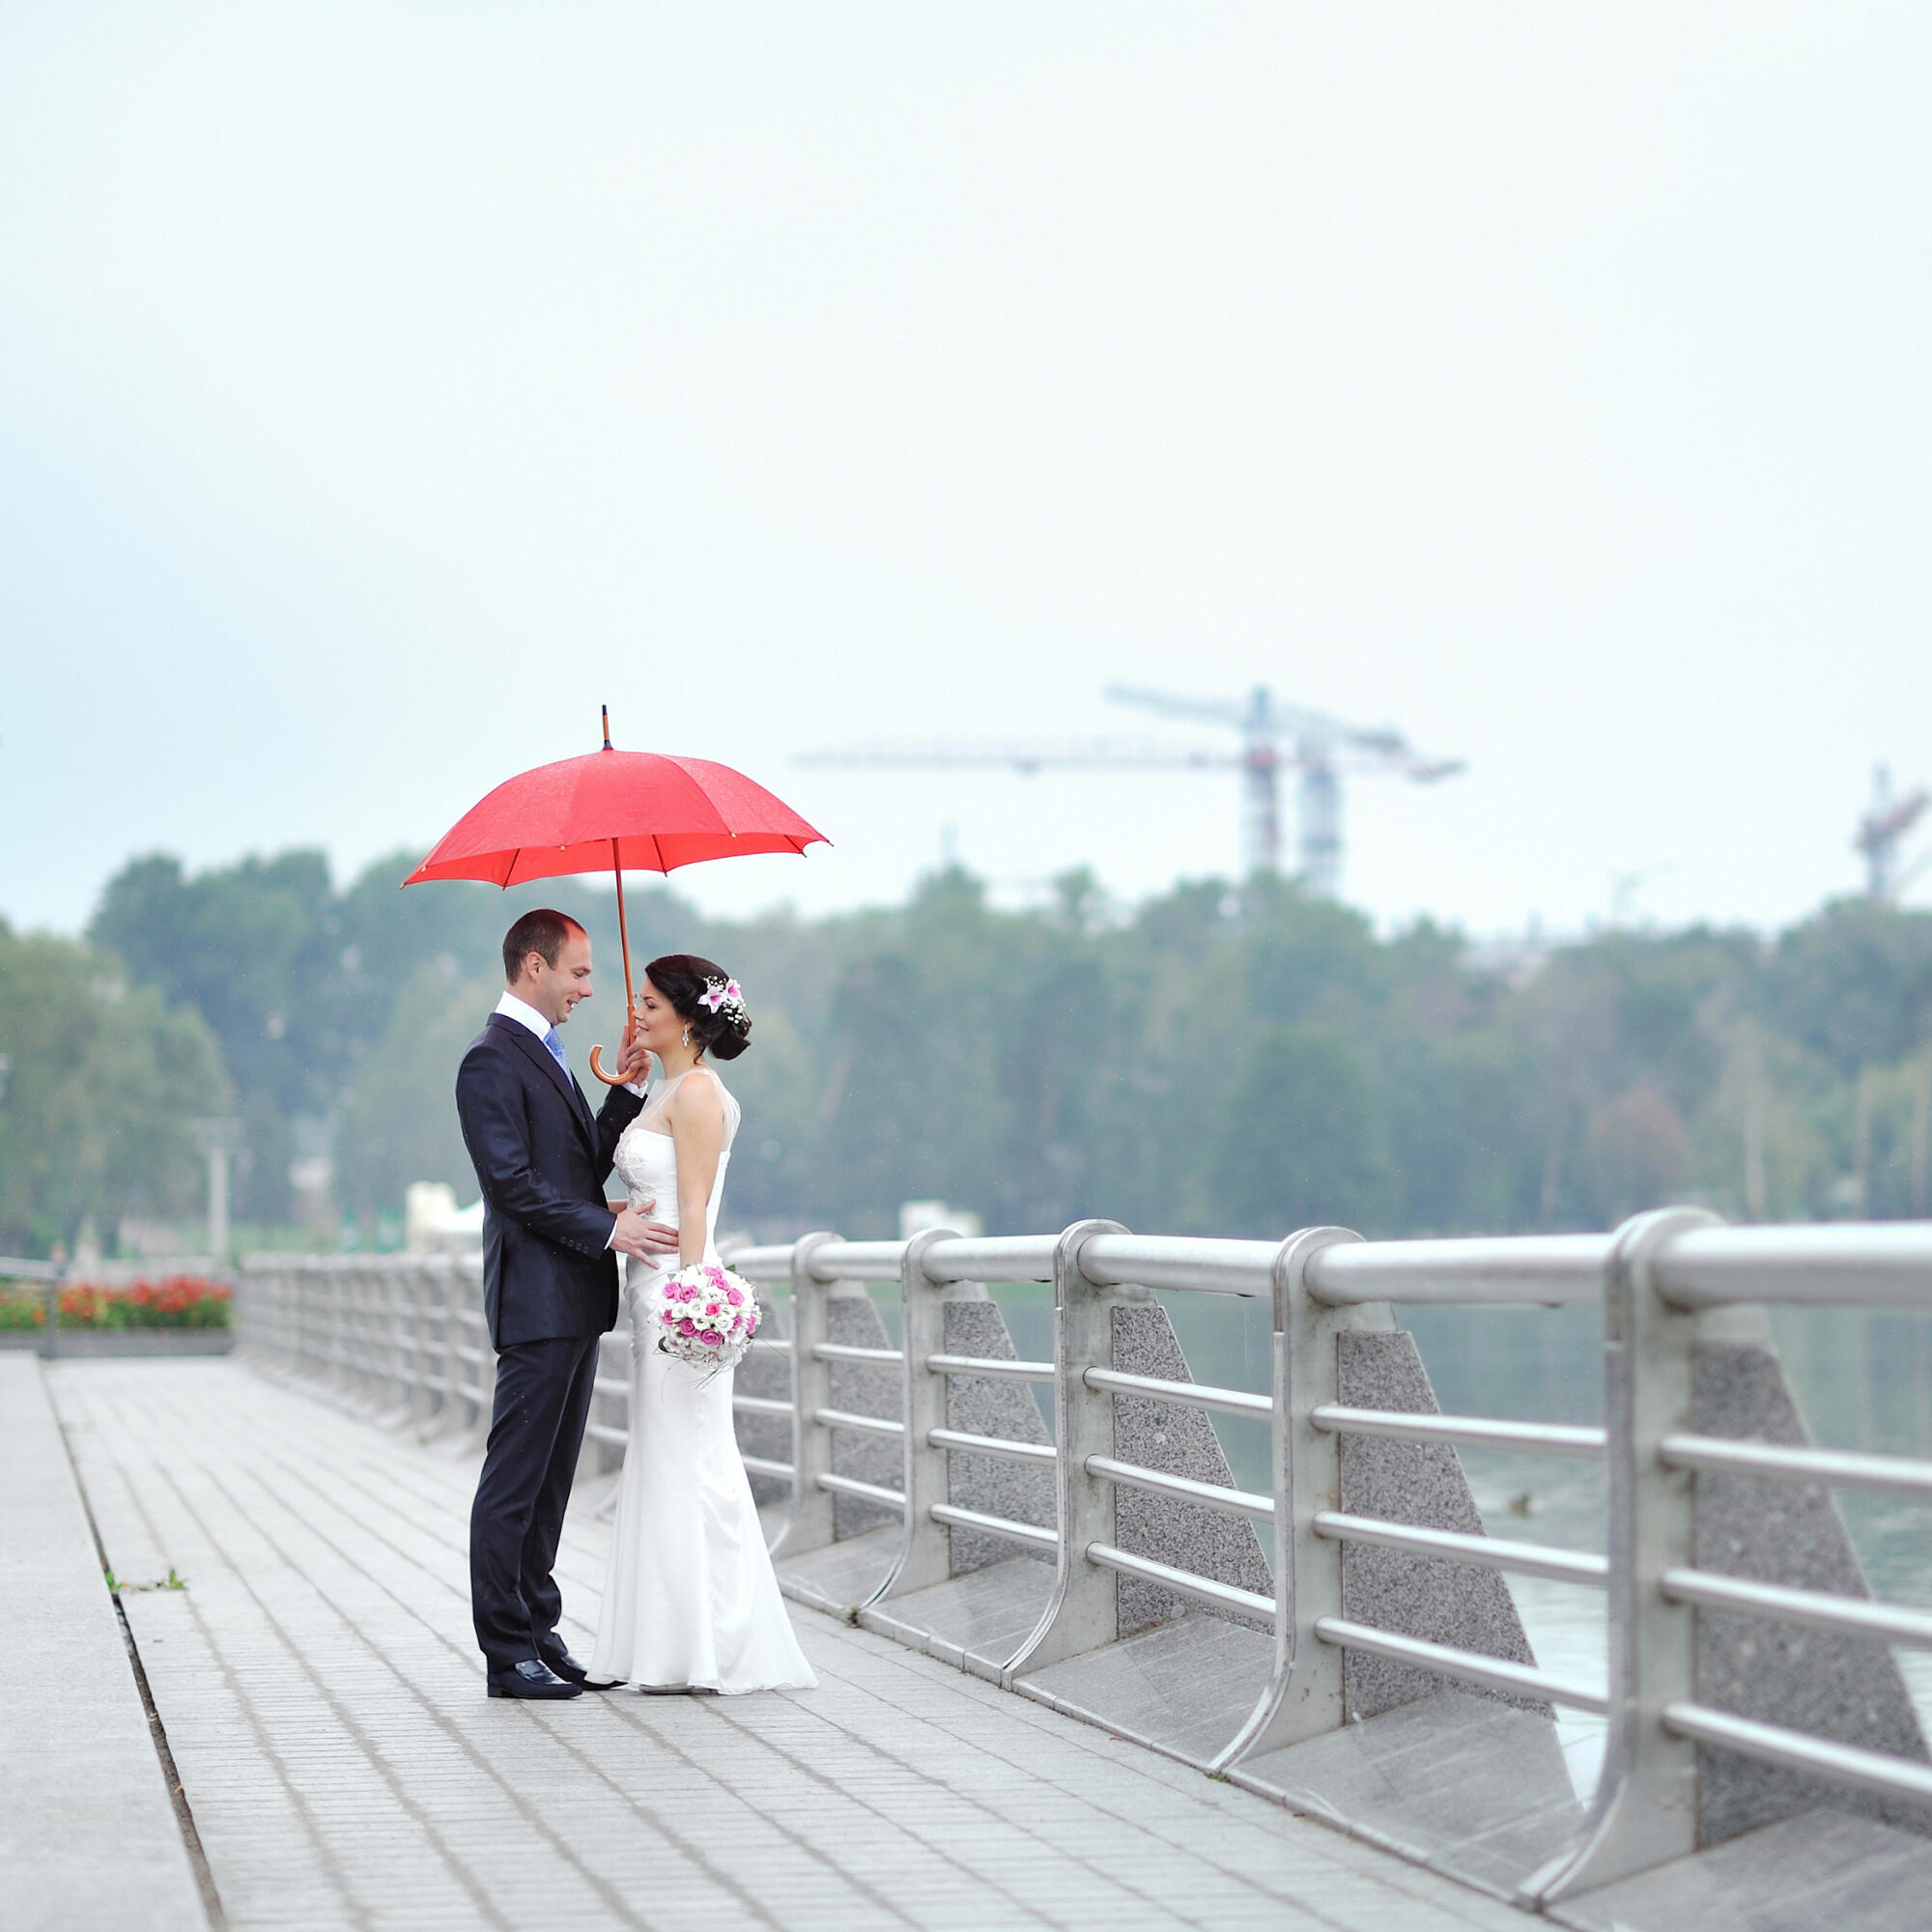 Weather-Proofing Your Wedding